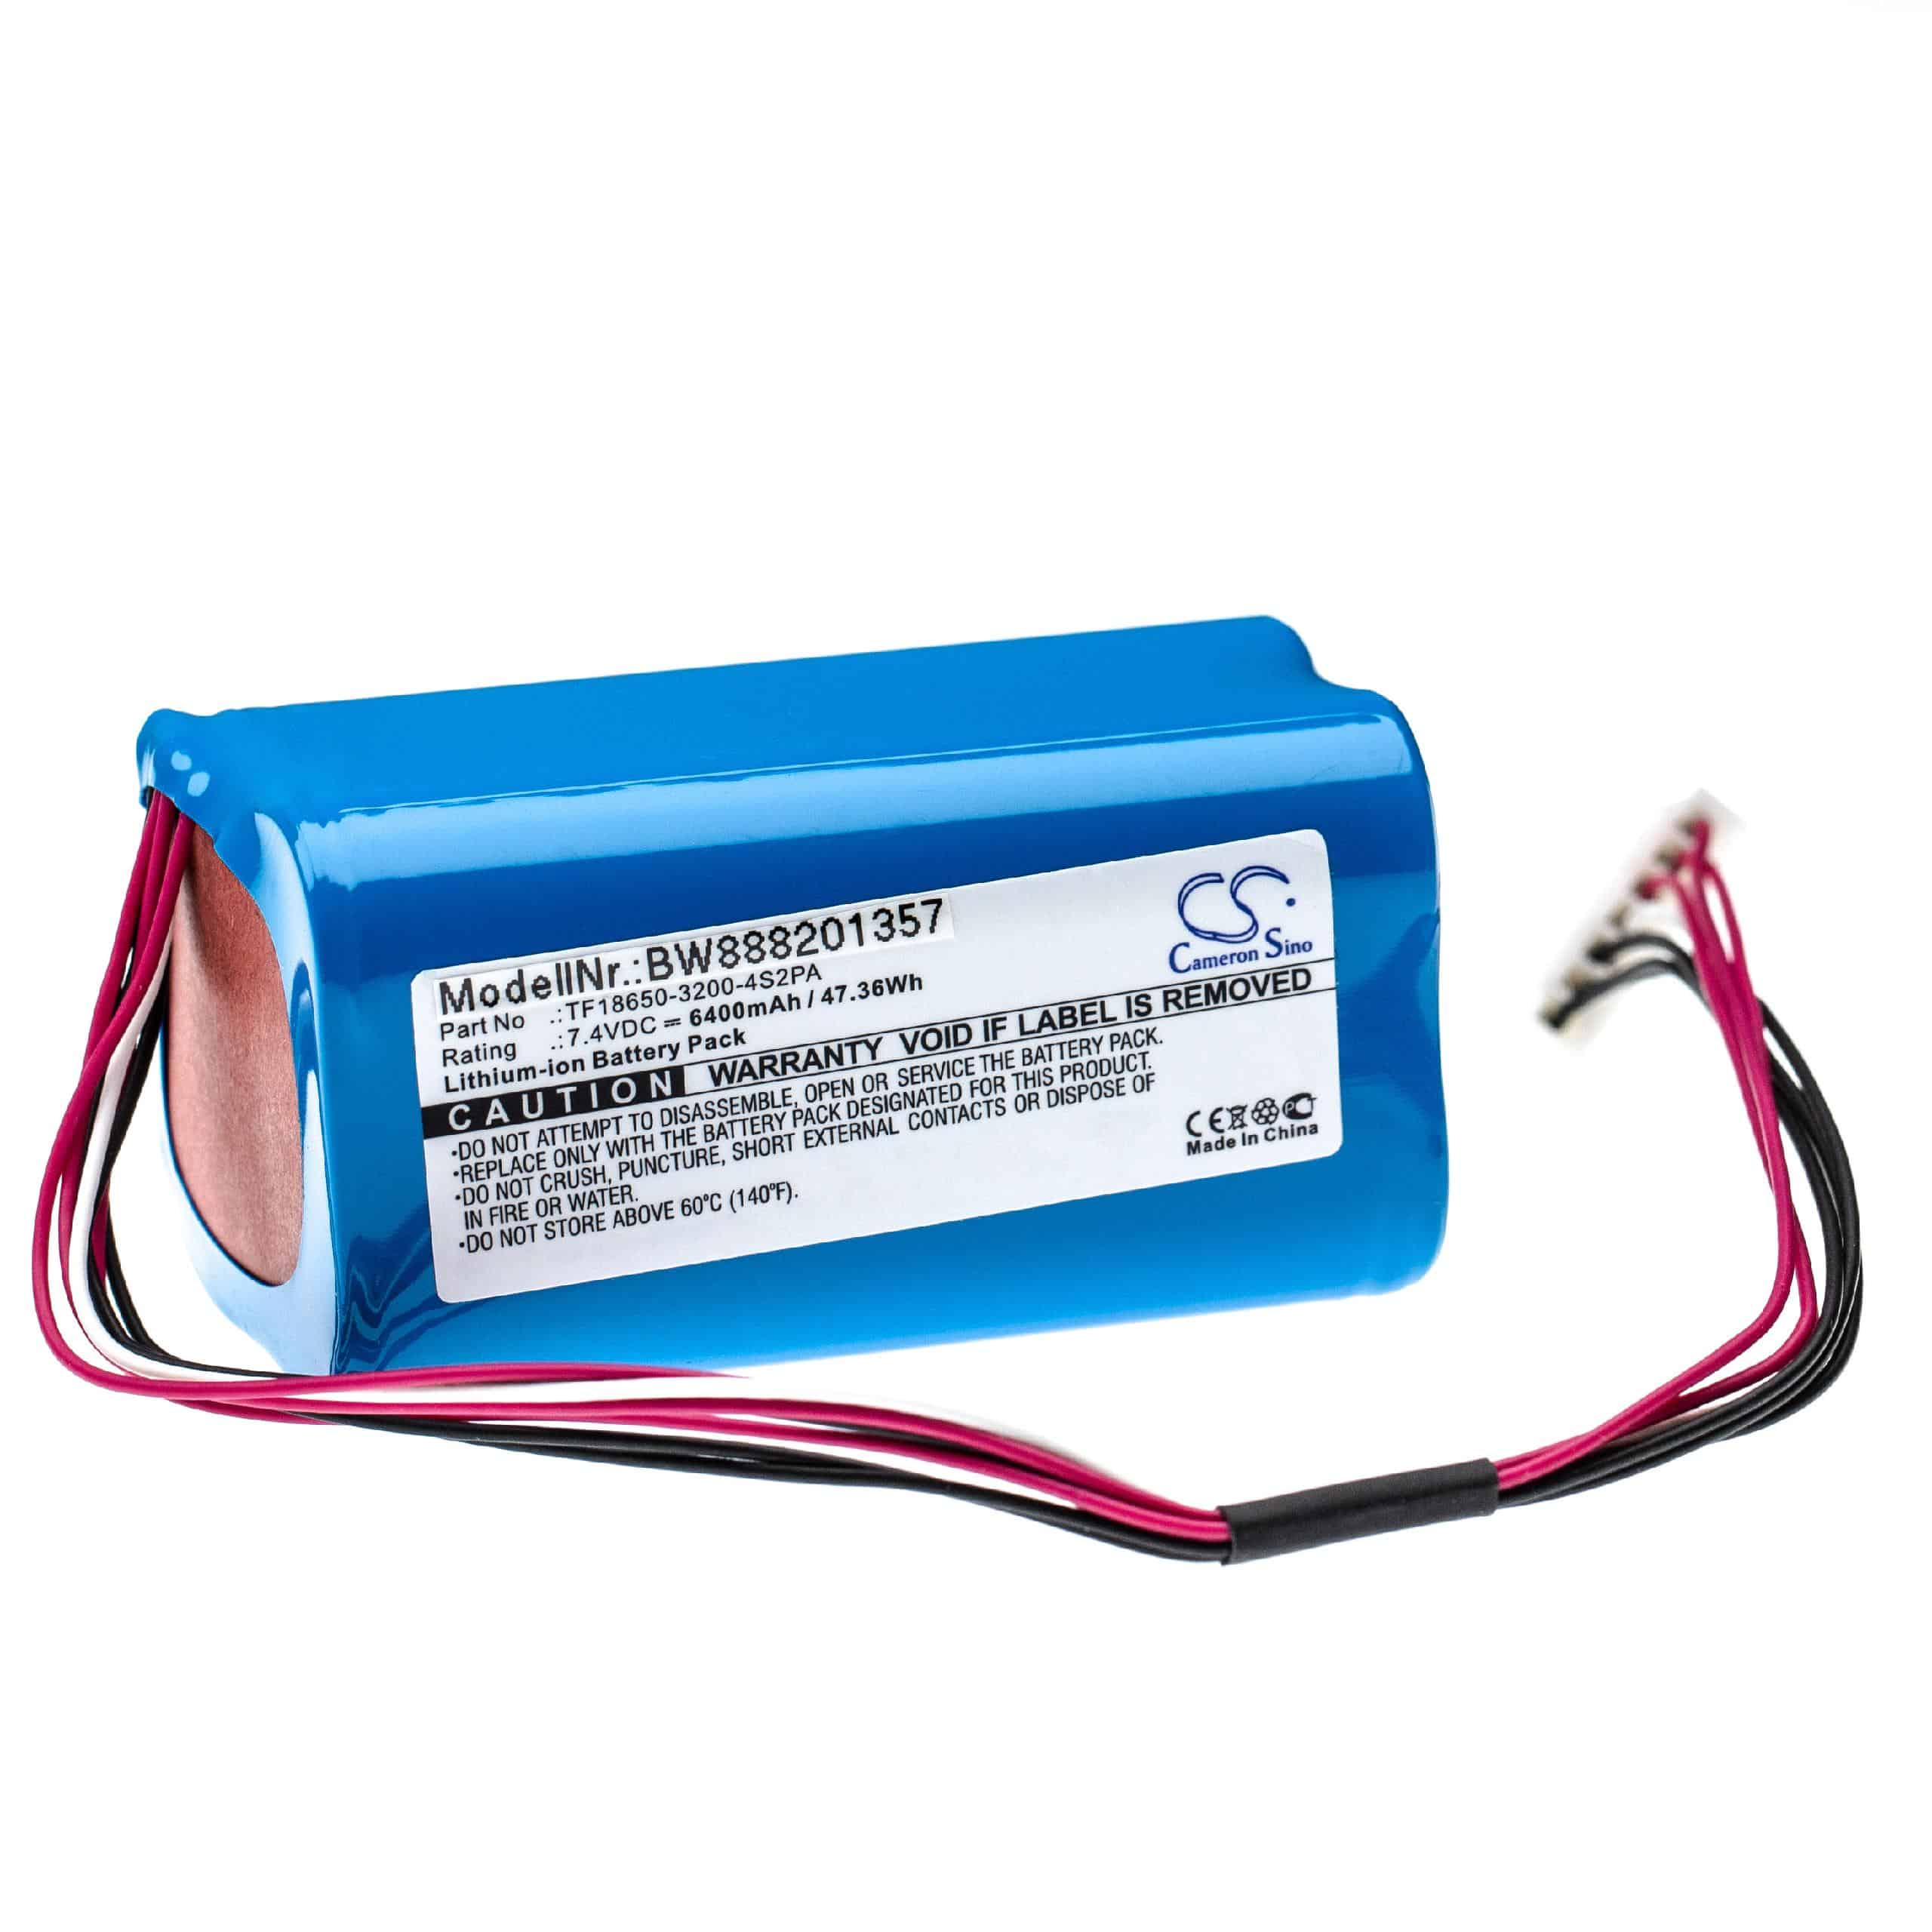  Battery replaces Marshall TF18650-3200-4S2PA, C196A1 for MarshallLoudspeaker - Li-Ion 6400 mAh